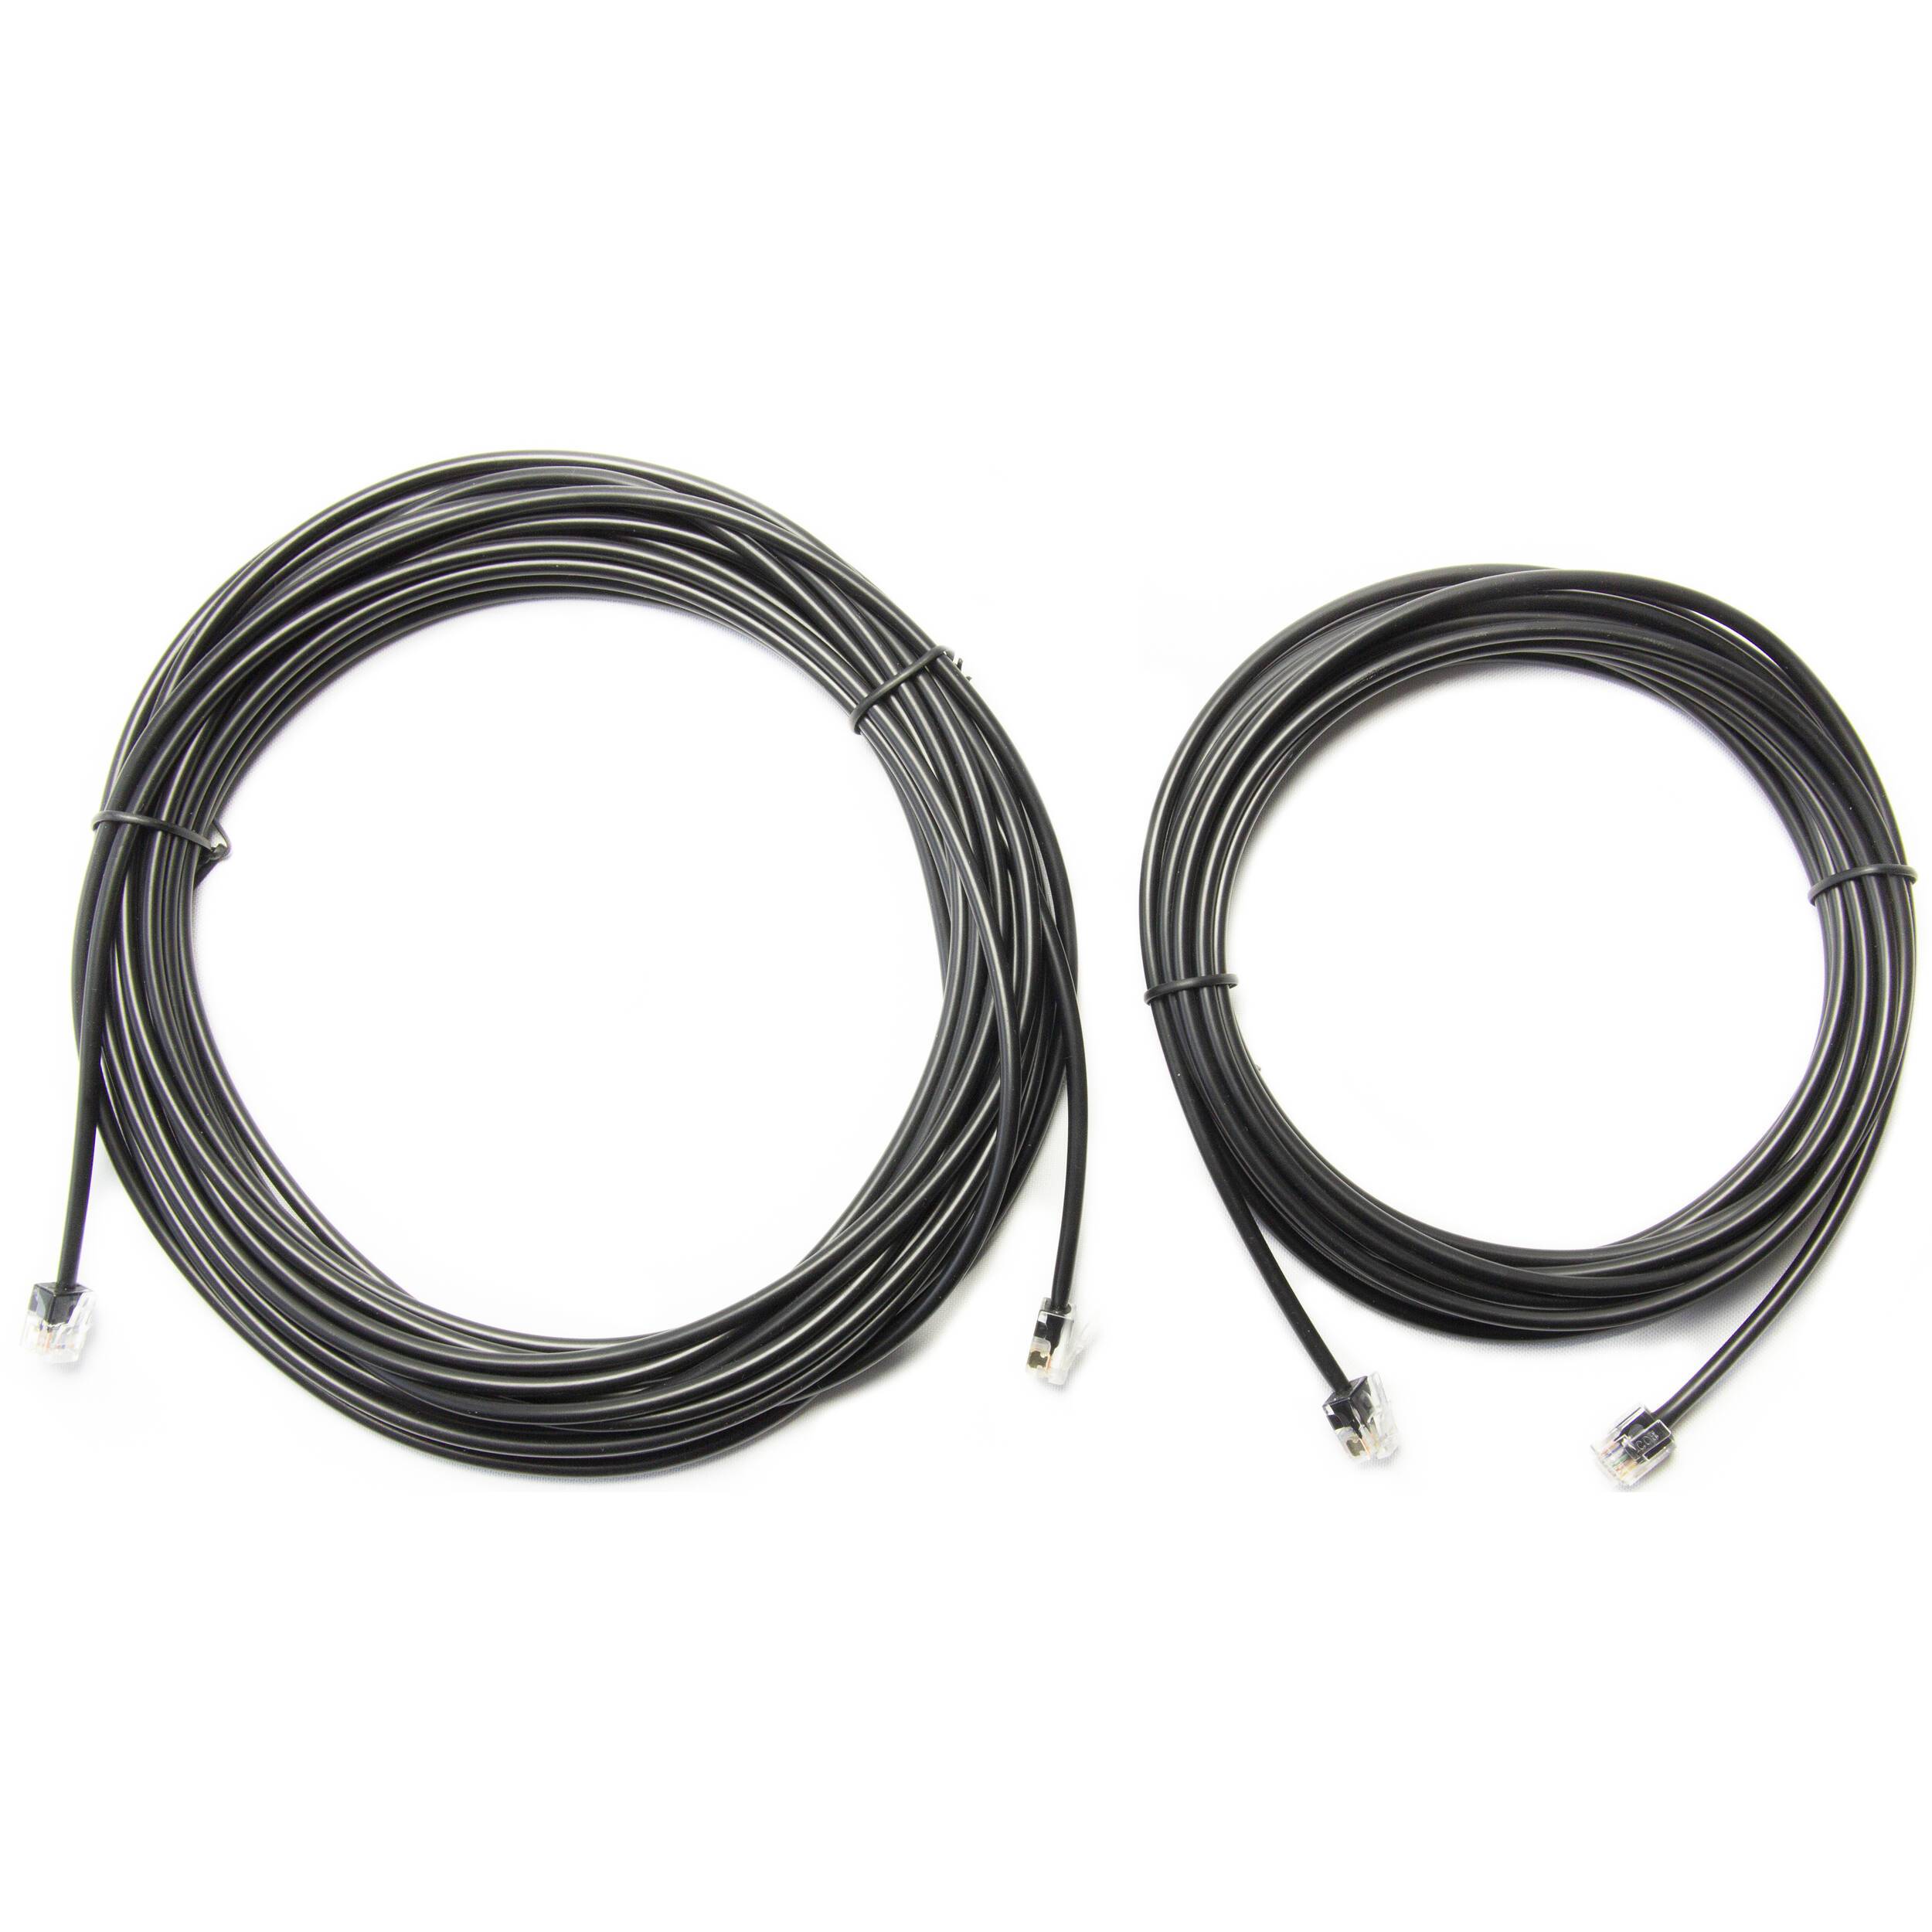 Konftel Daisy-Chain Cables - 900102152 - Headset Advisor